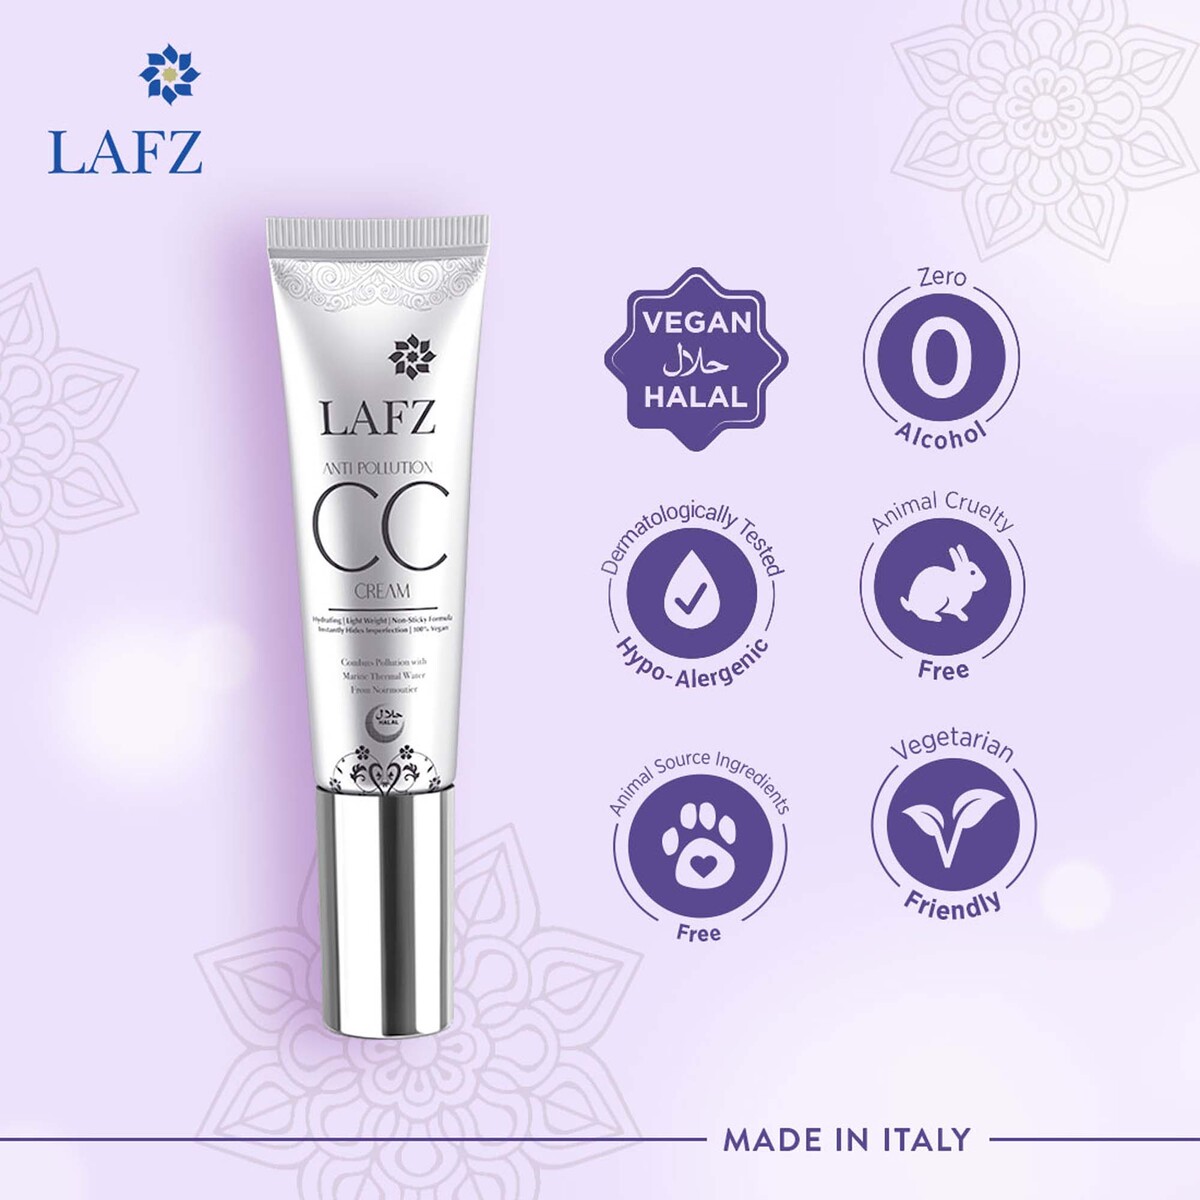 Lafz Anti-Pollution CC Cream, Non-Sticky Formula for Long-Lasting Radiant Finish, Made in Italy, Halal & Vegan, 30ml, Medium Beige